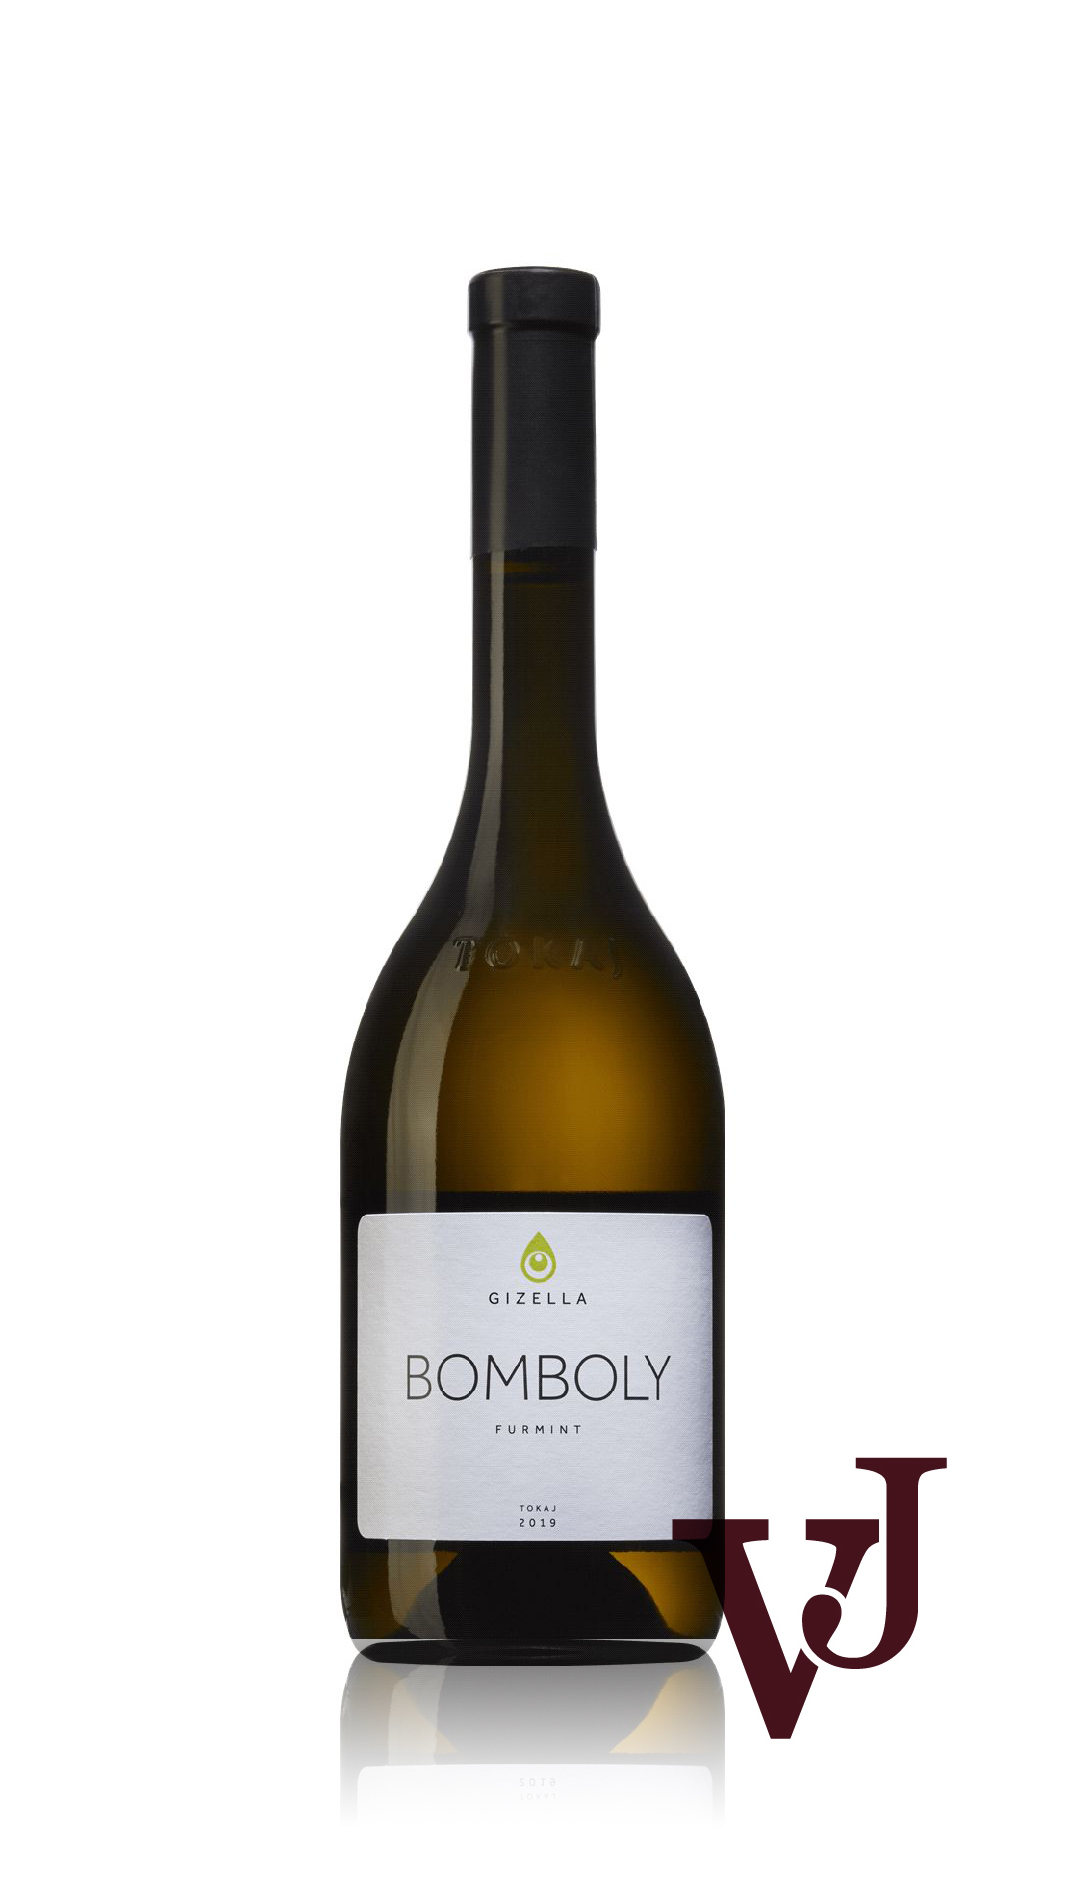 Vitt Vin - Bomboly Furmint Gizella Pince artikel nummer 9181501 från producenten Gizellapince från området Ungern